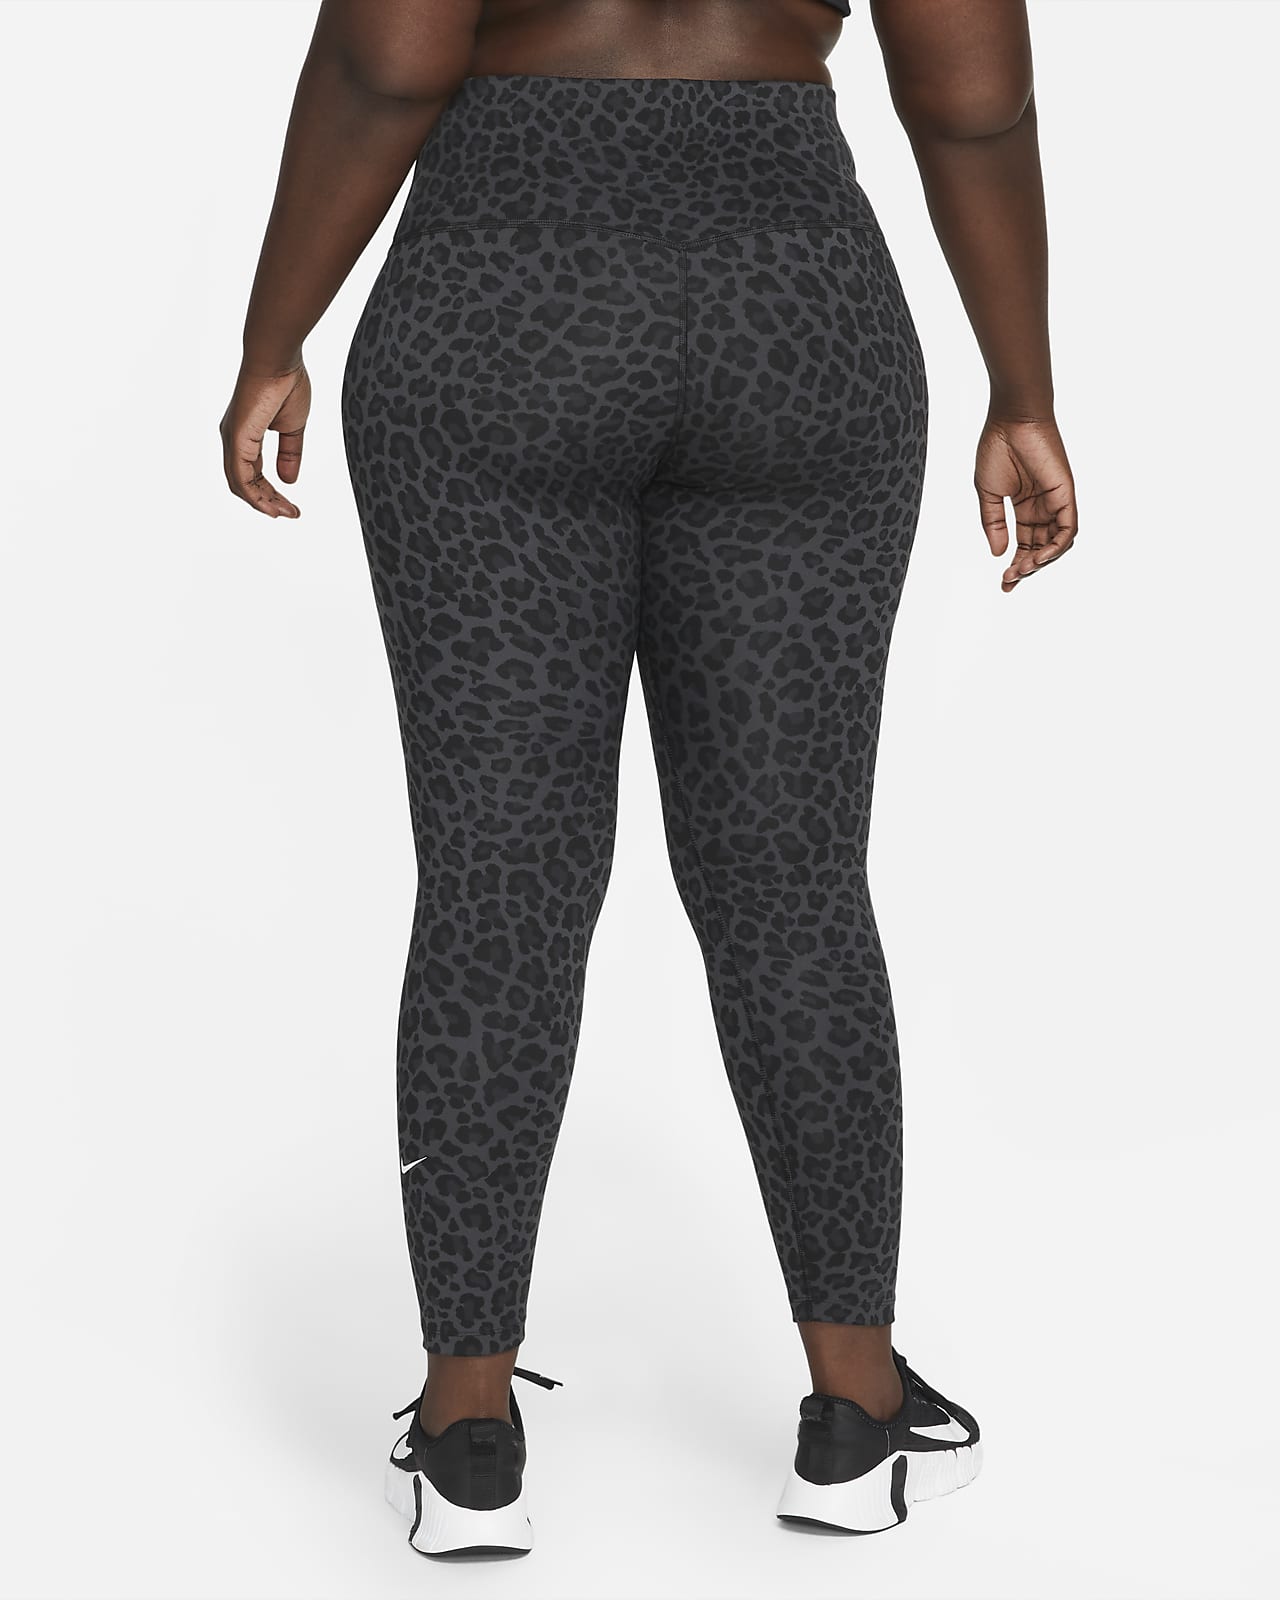 Nike One Women's High-Waisted Printed Leggings (Plus Size). Nike LU